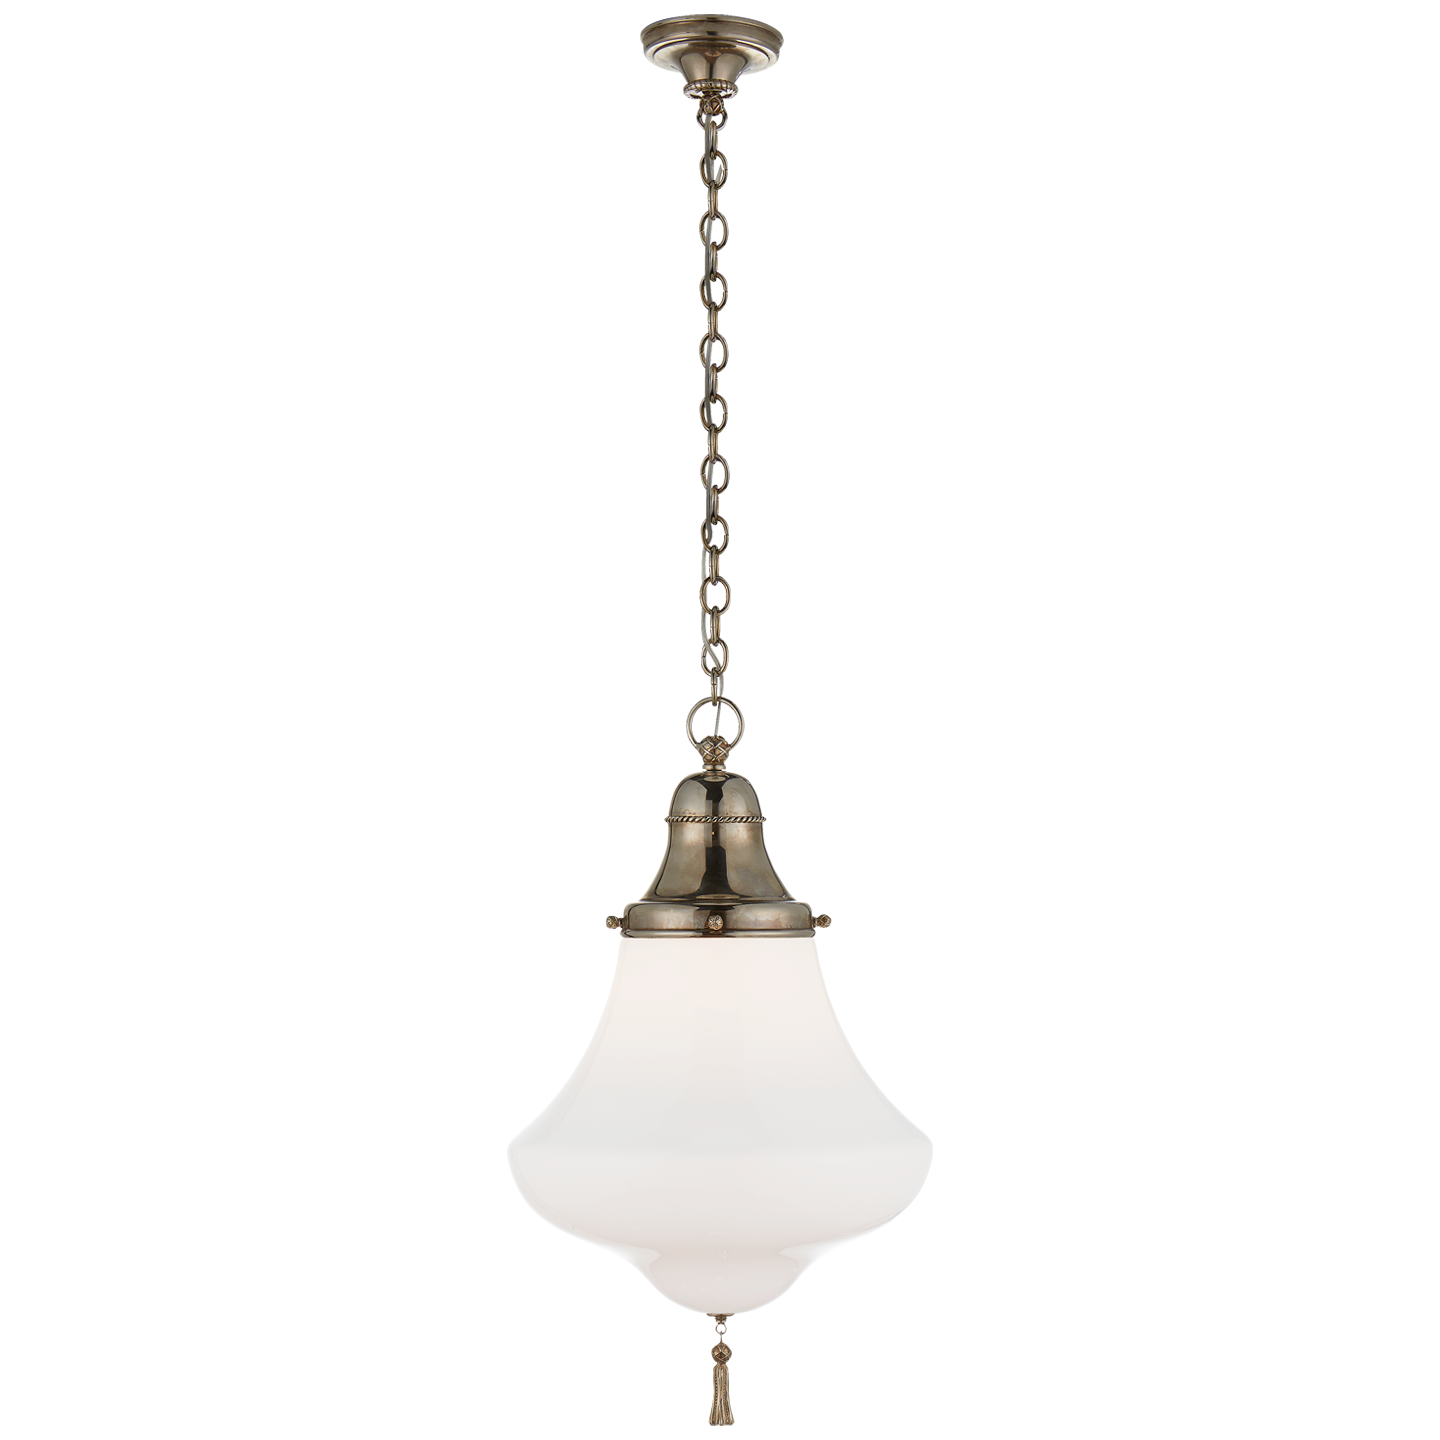 Xavier Small Silver Pendant Lamp 